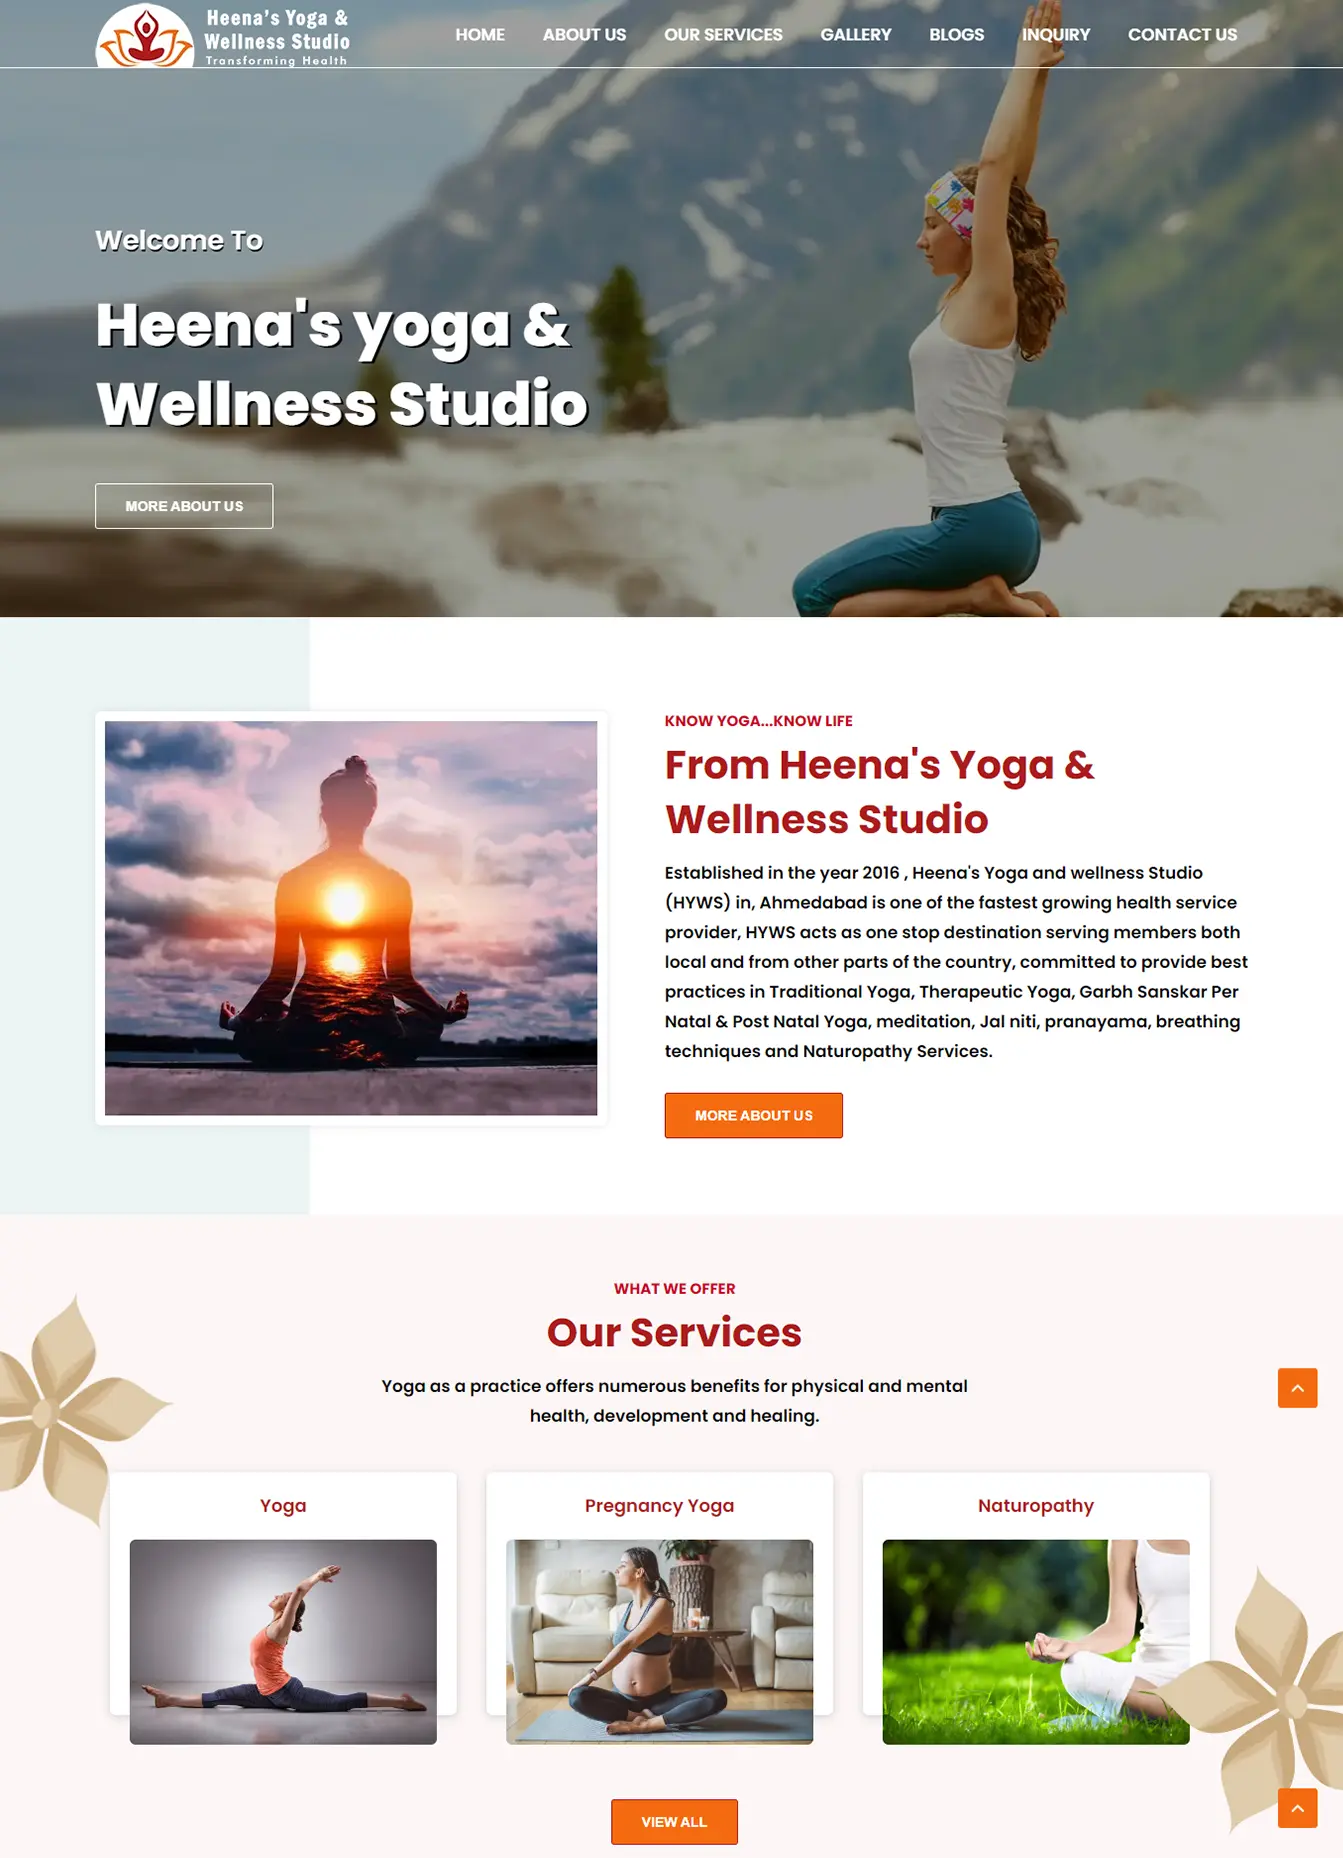 Heena's Yoga - Portfolio Website